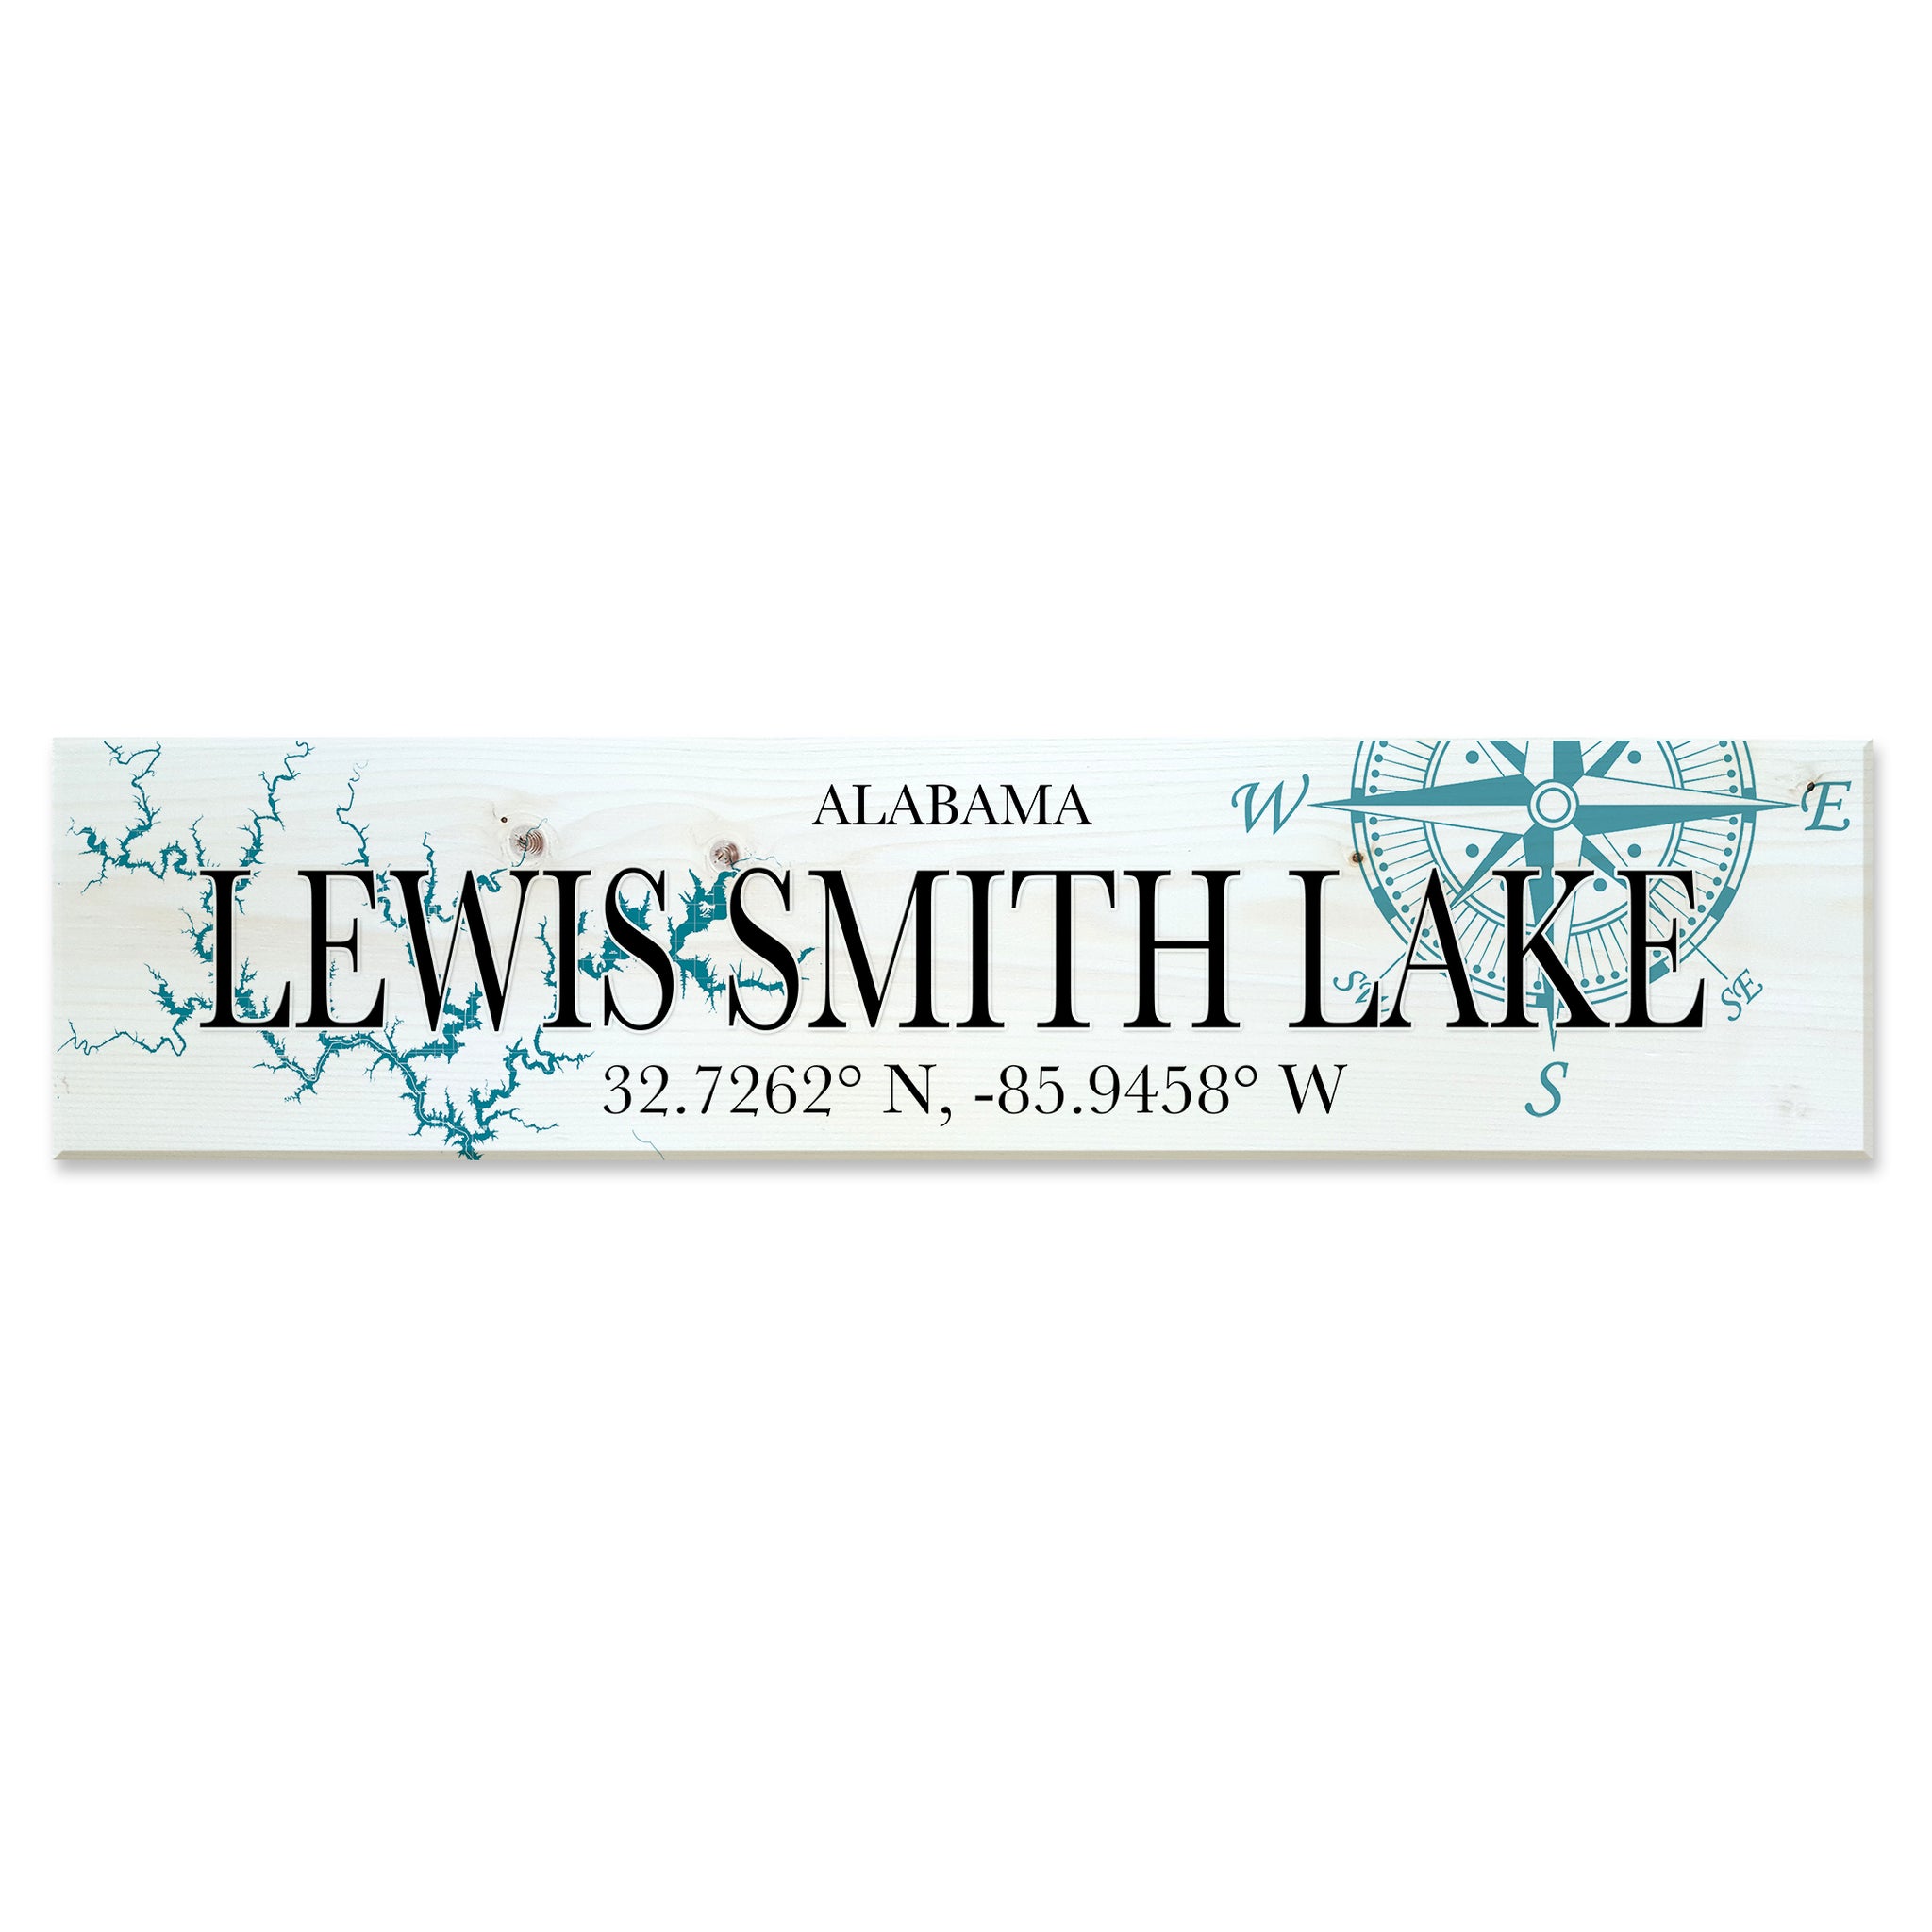 Lewis Smith Lake, AL Coordinate Sign